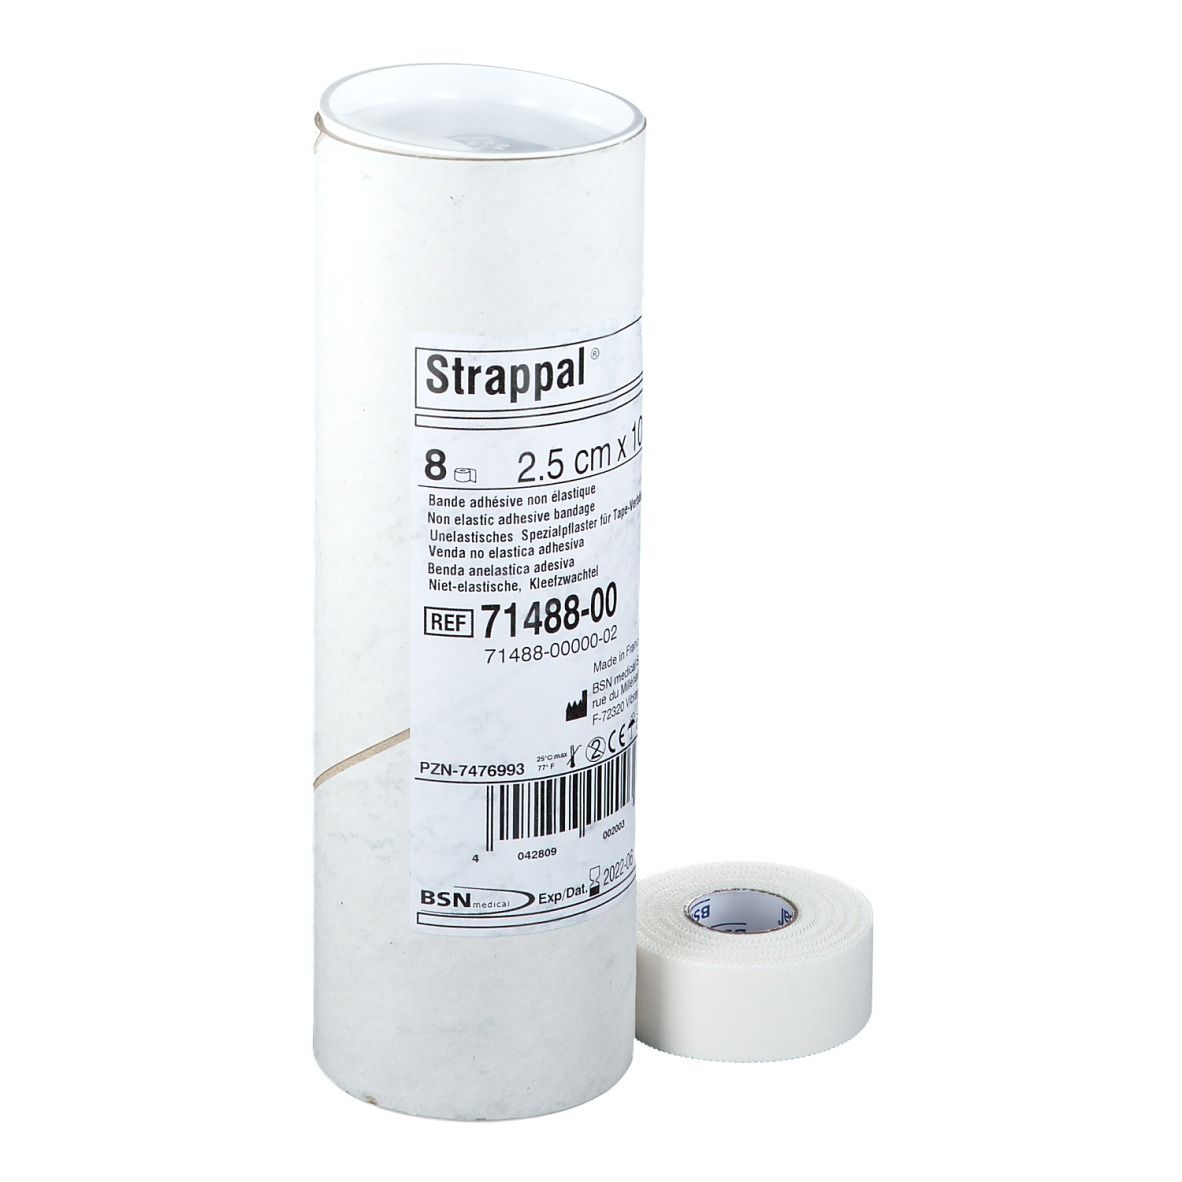 Strappal® S 2,5 cm x 10 m 71488-00